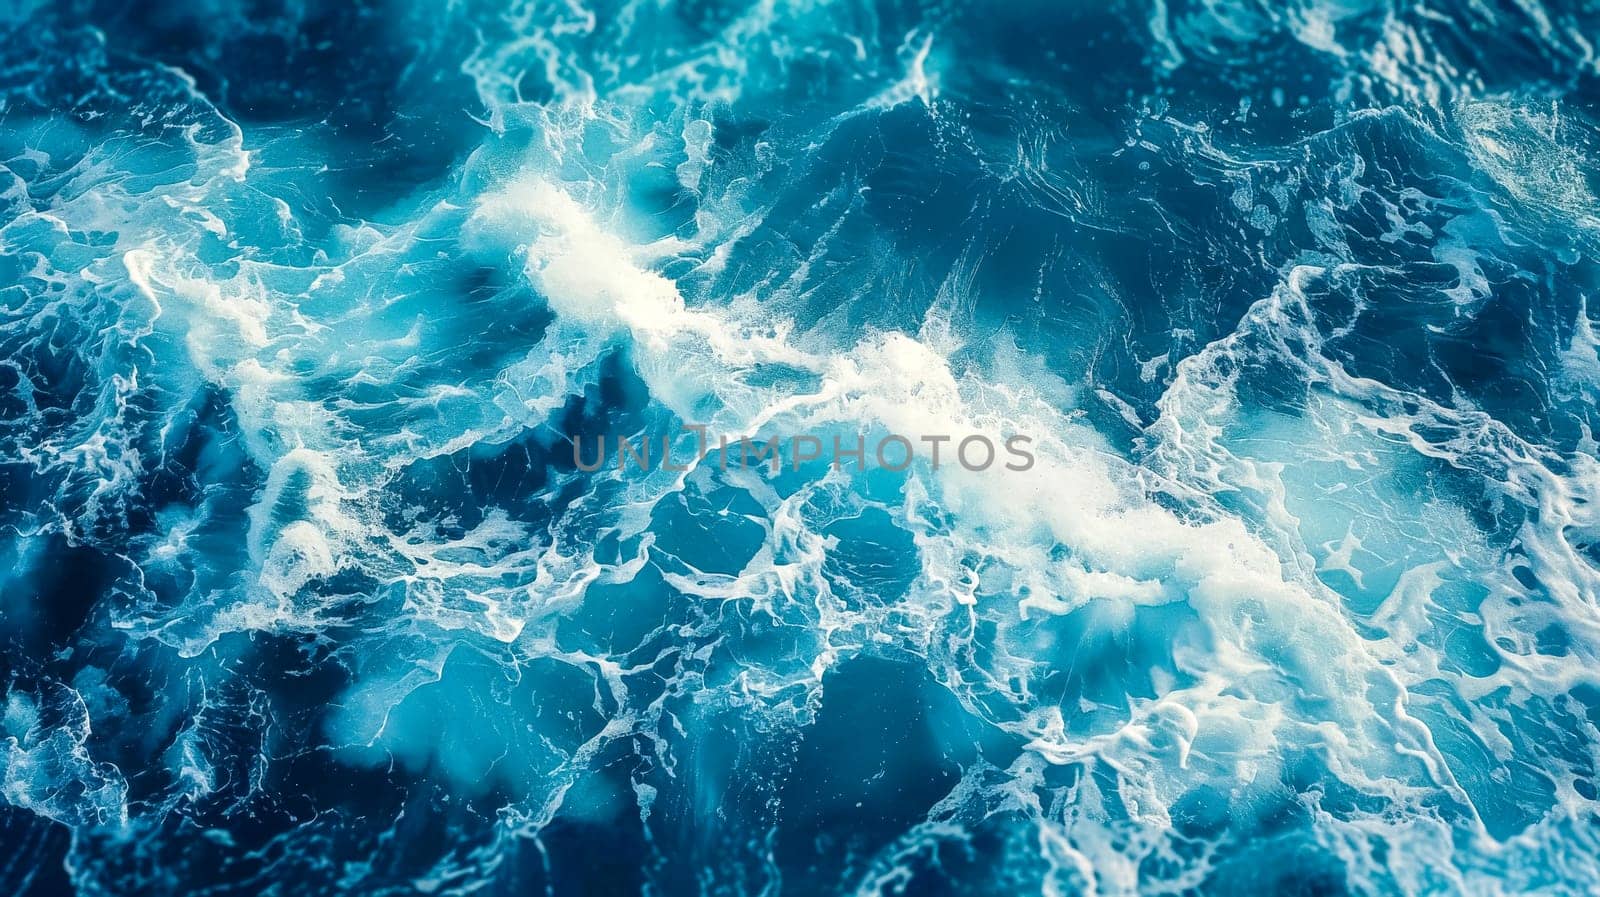 Deep blue sea waves texture by Edophoto